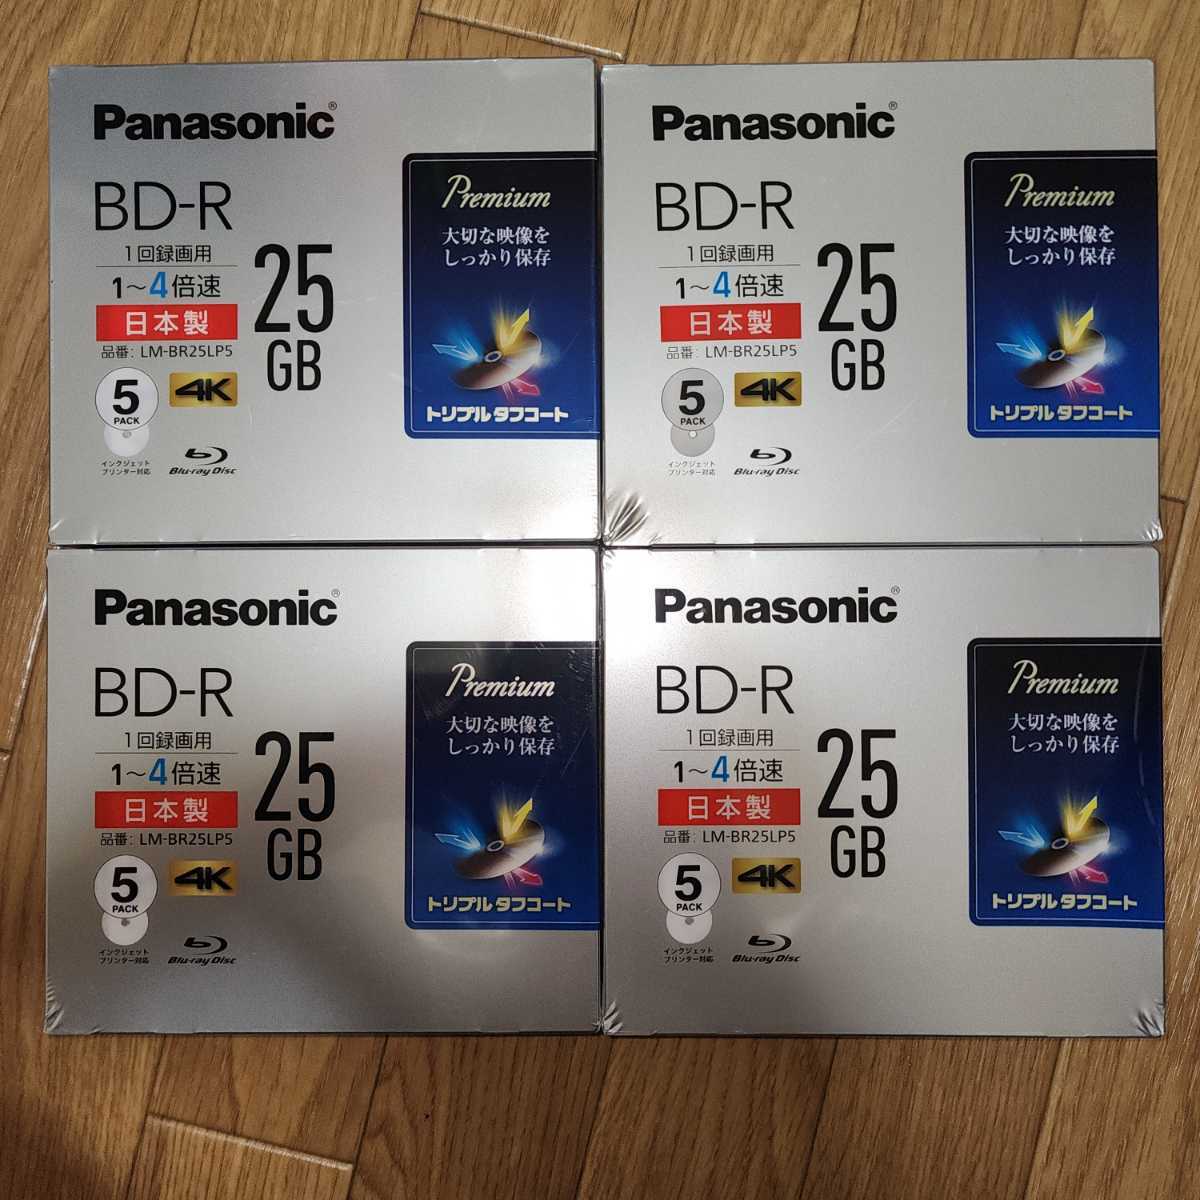 Panasonic ブルーレイディスク BD-RE 25GB 4セット 日本最大の glory